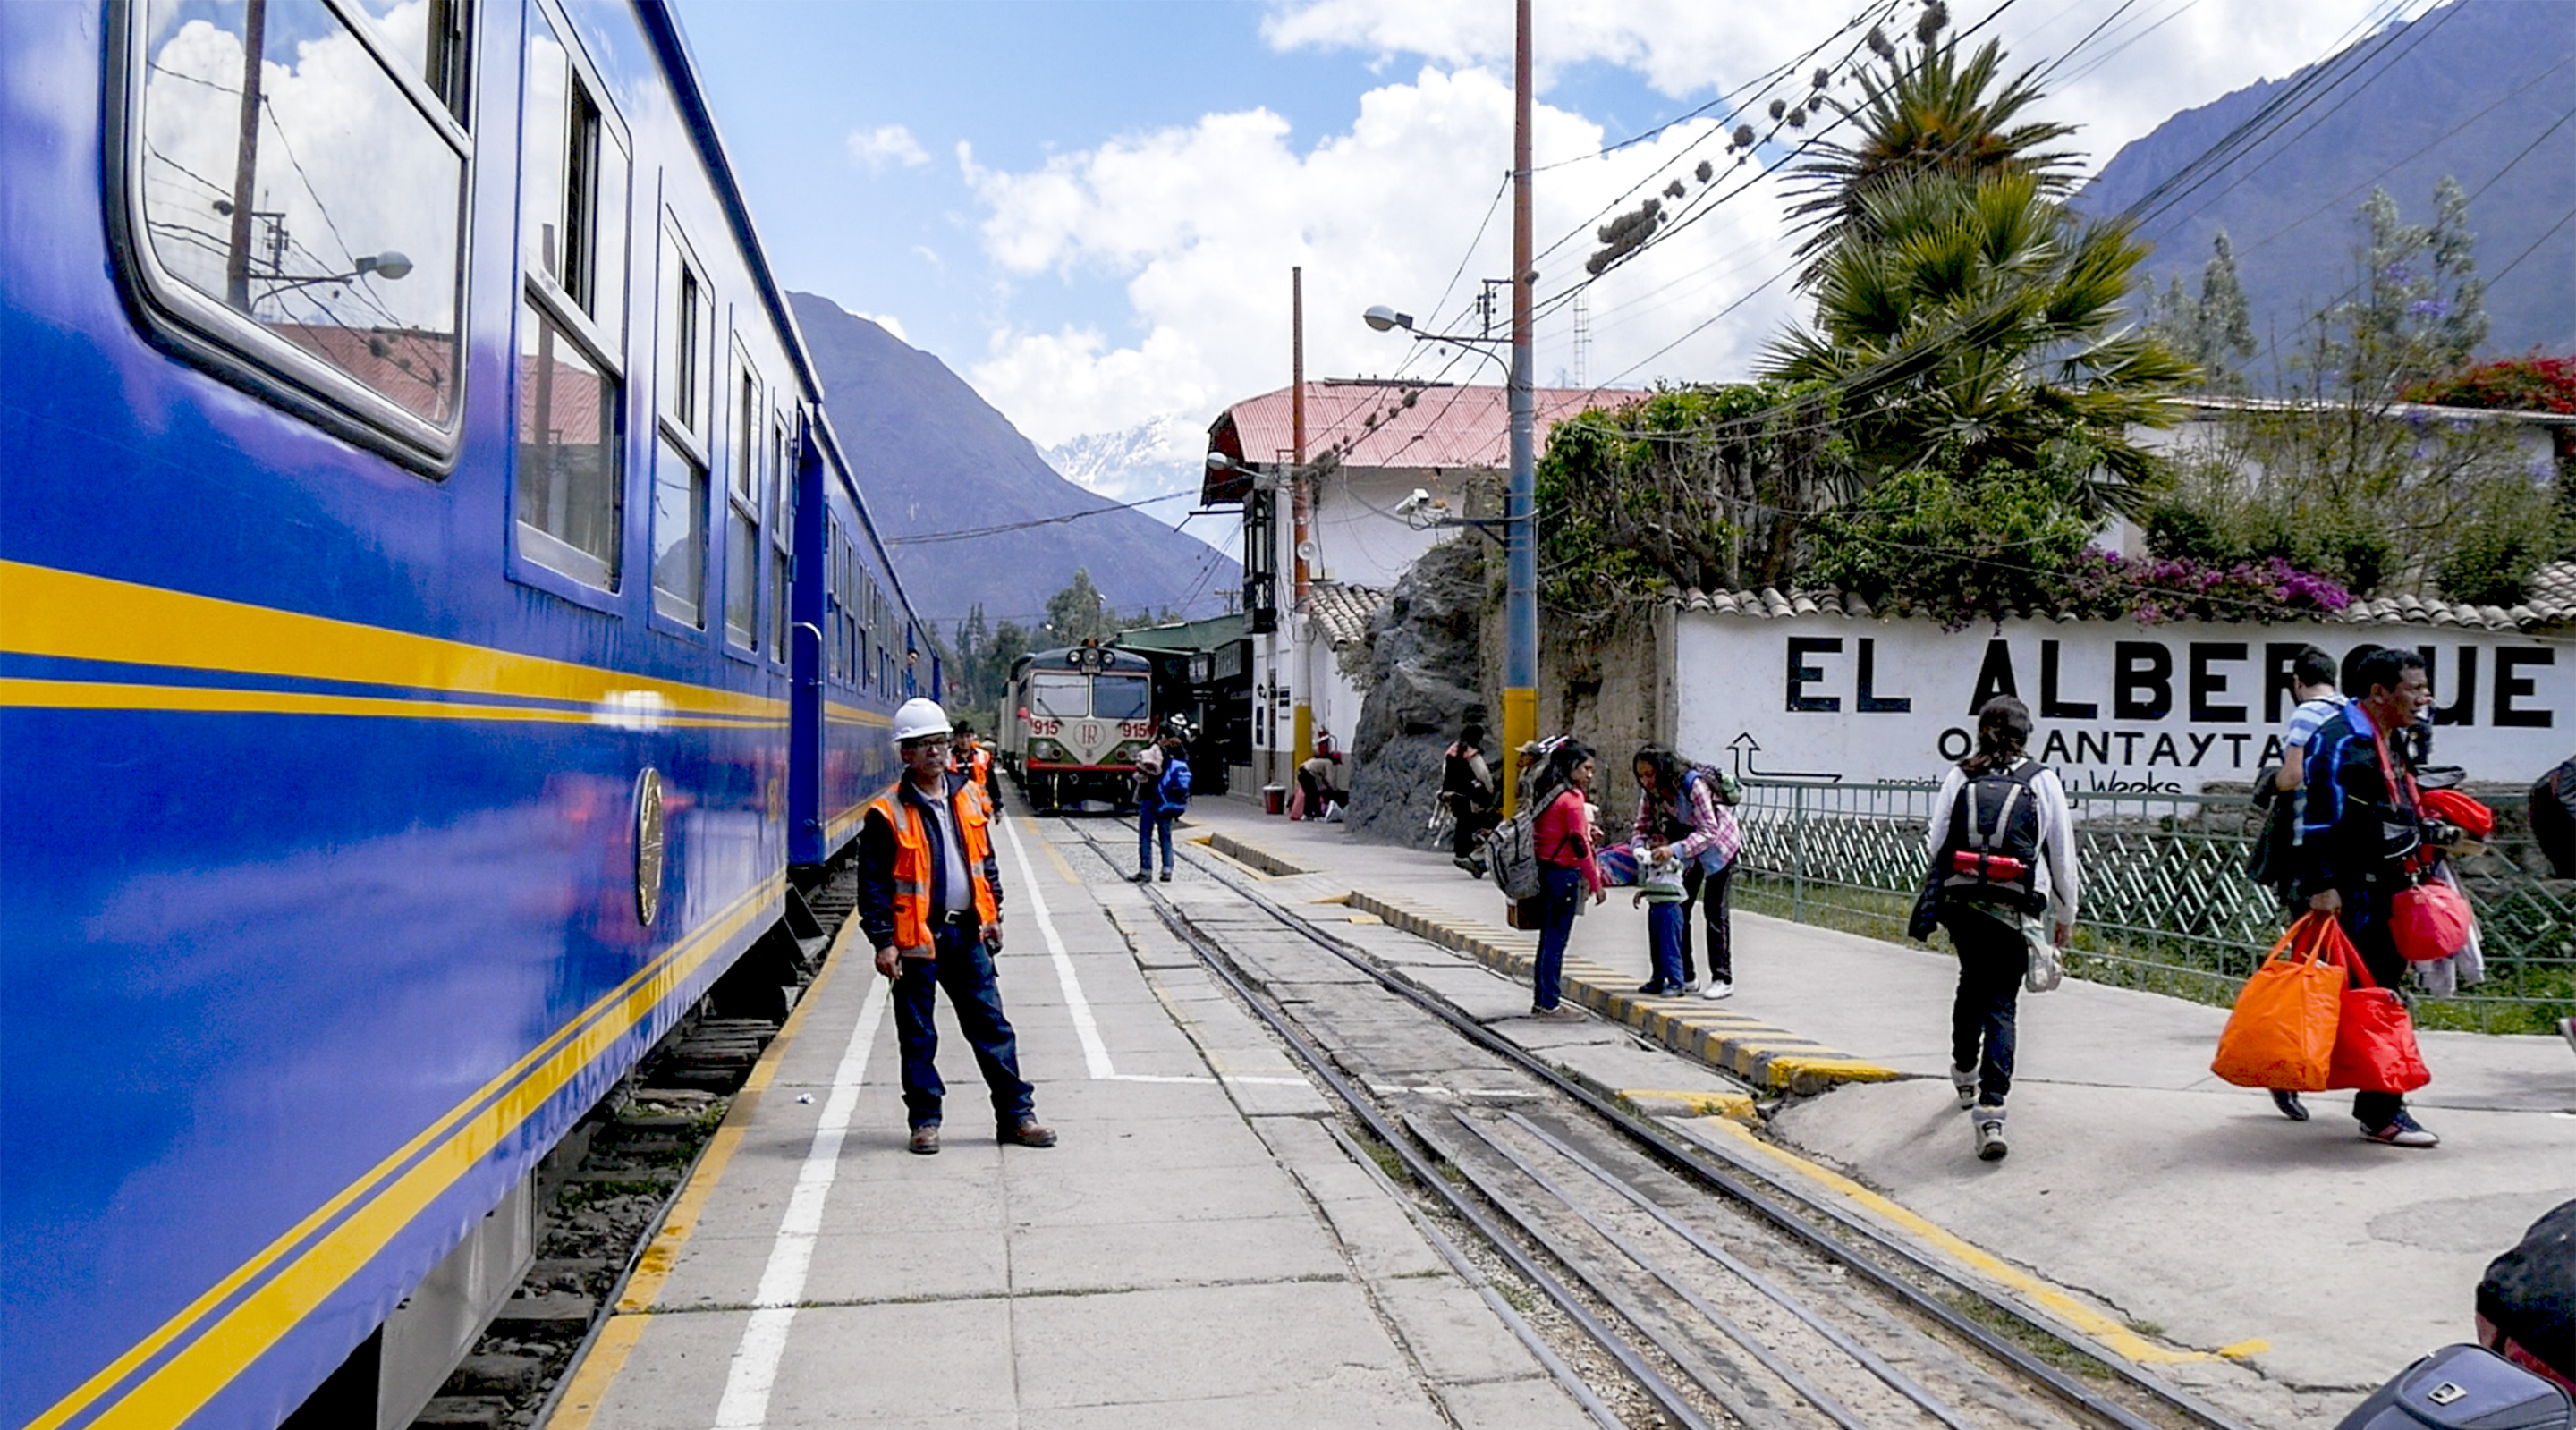 Catch a train into the heart of the Inca Empire.